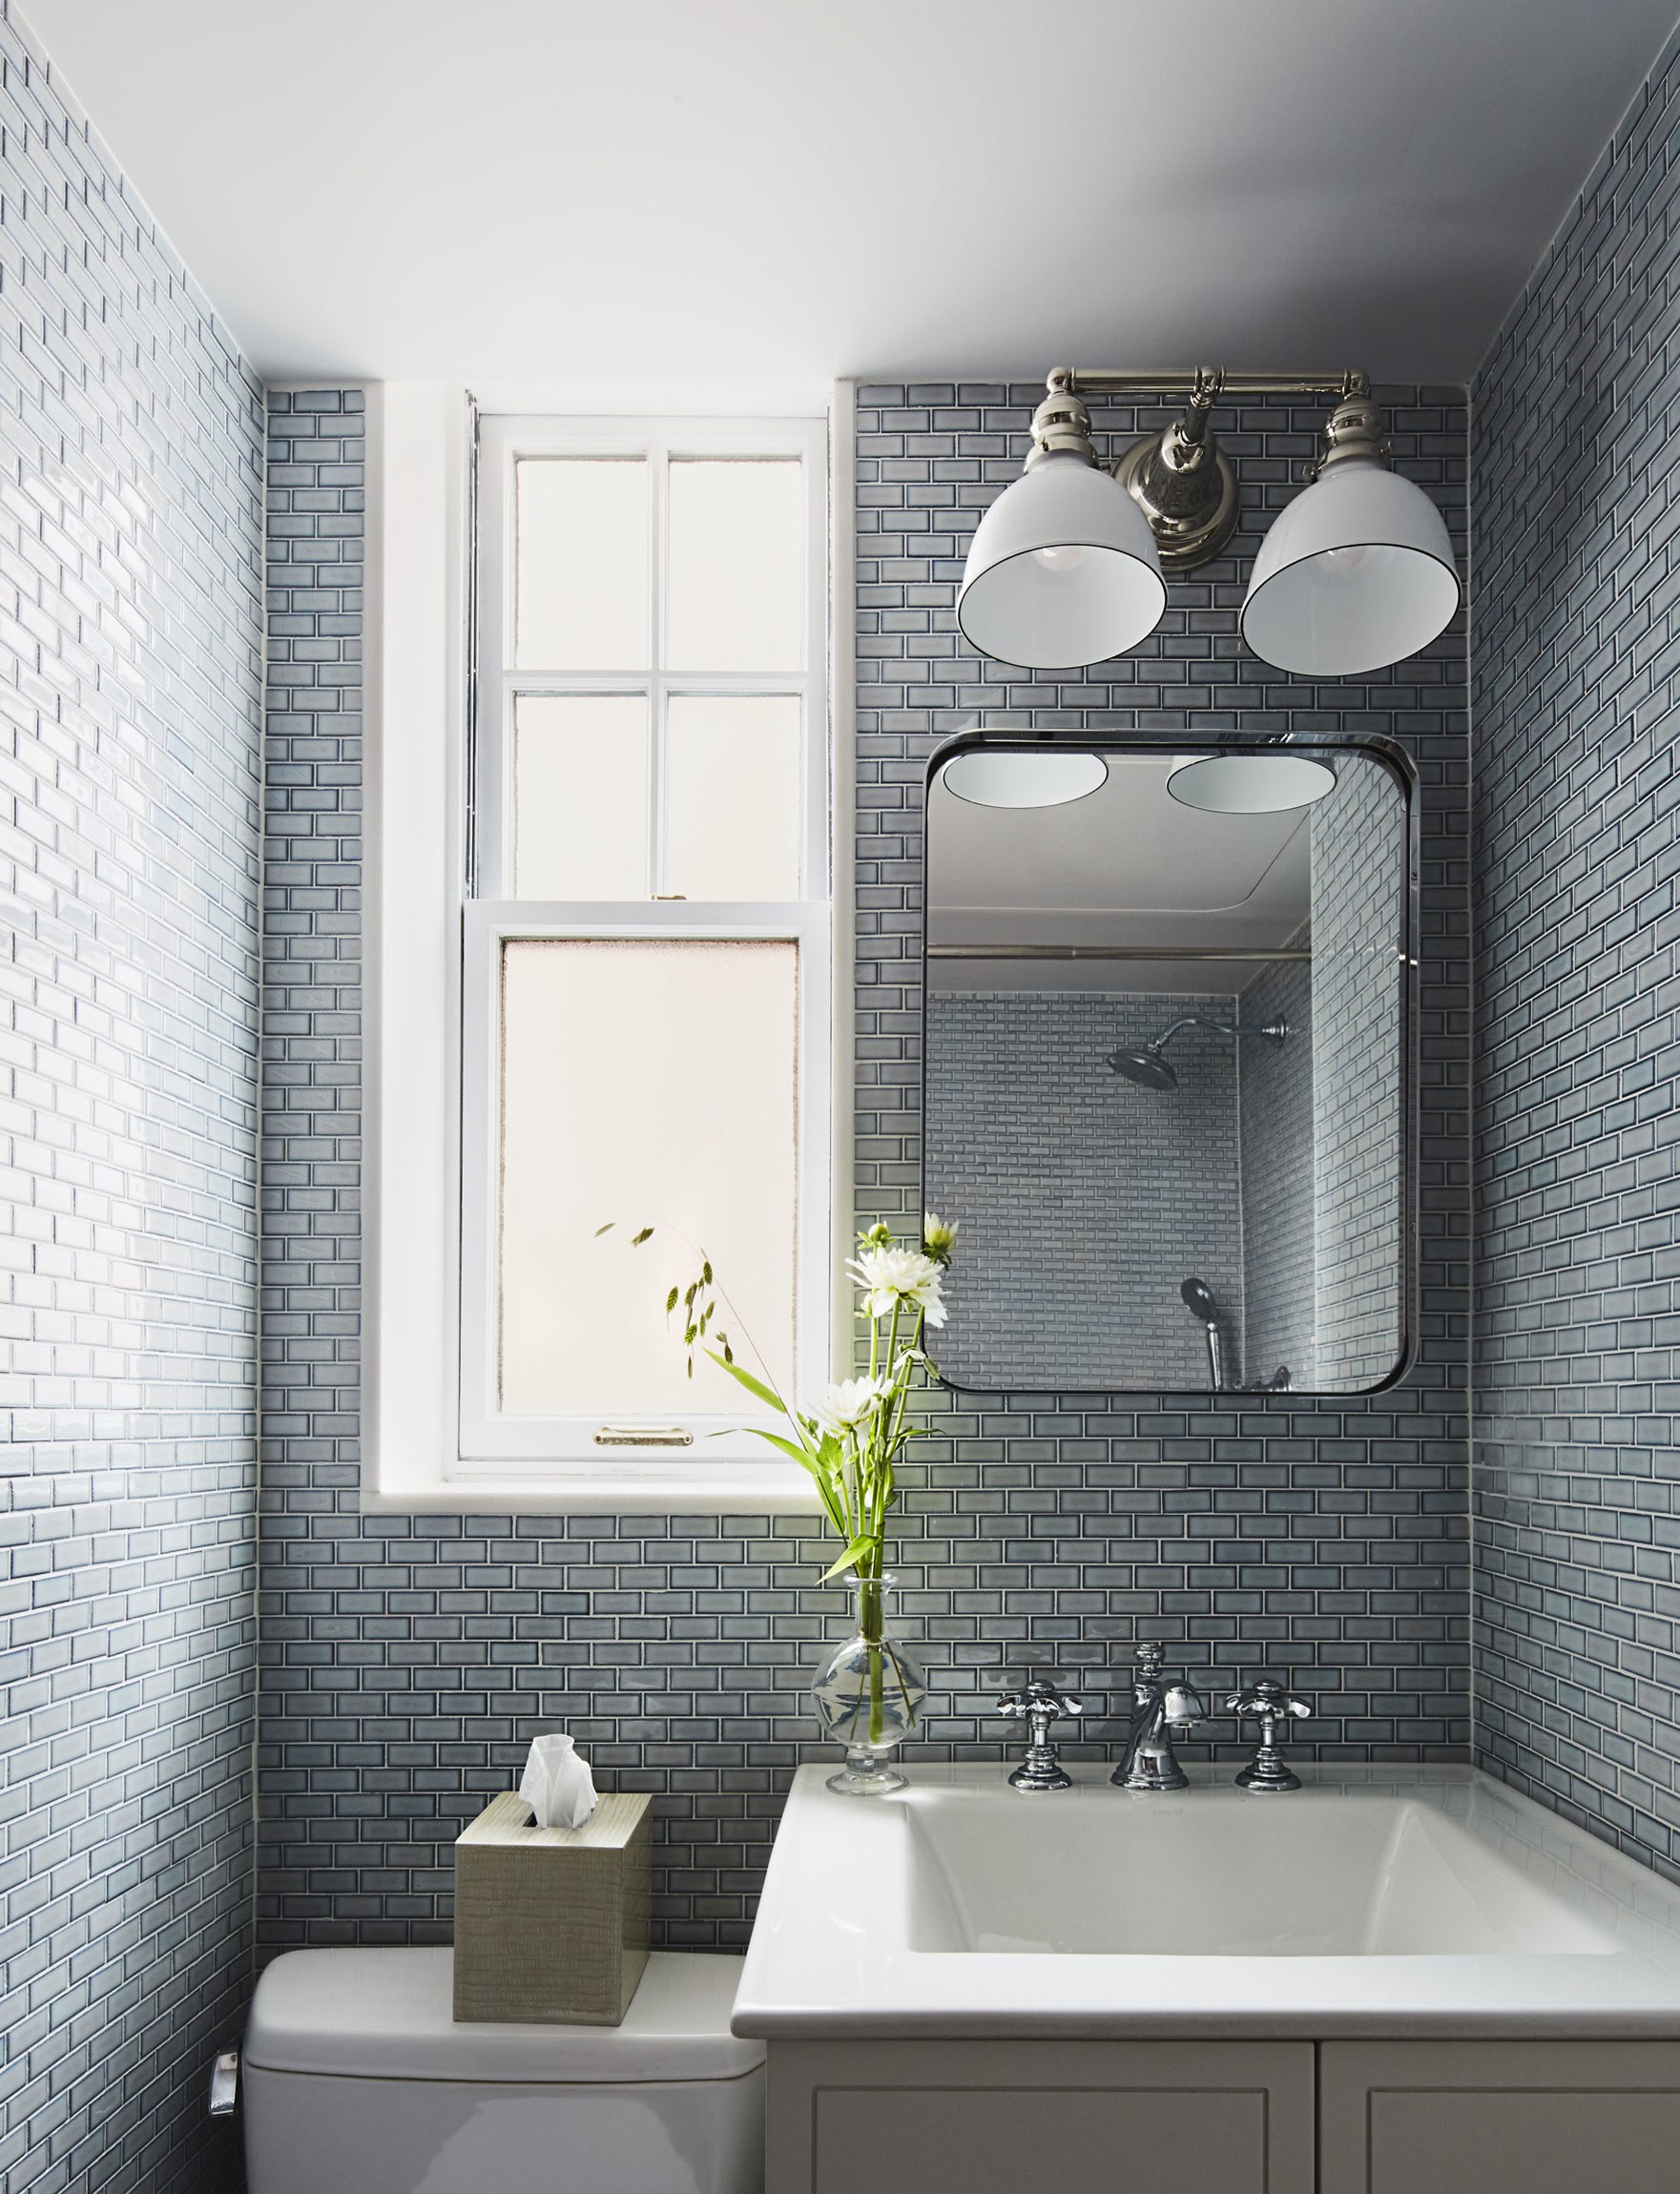 Small Bathroom Wall Tile Ideas
 This Bathroom Tile Design Idea Changes Everything